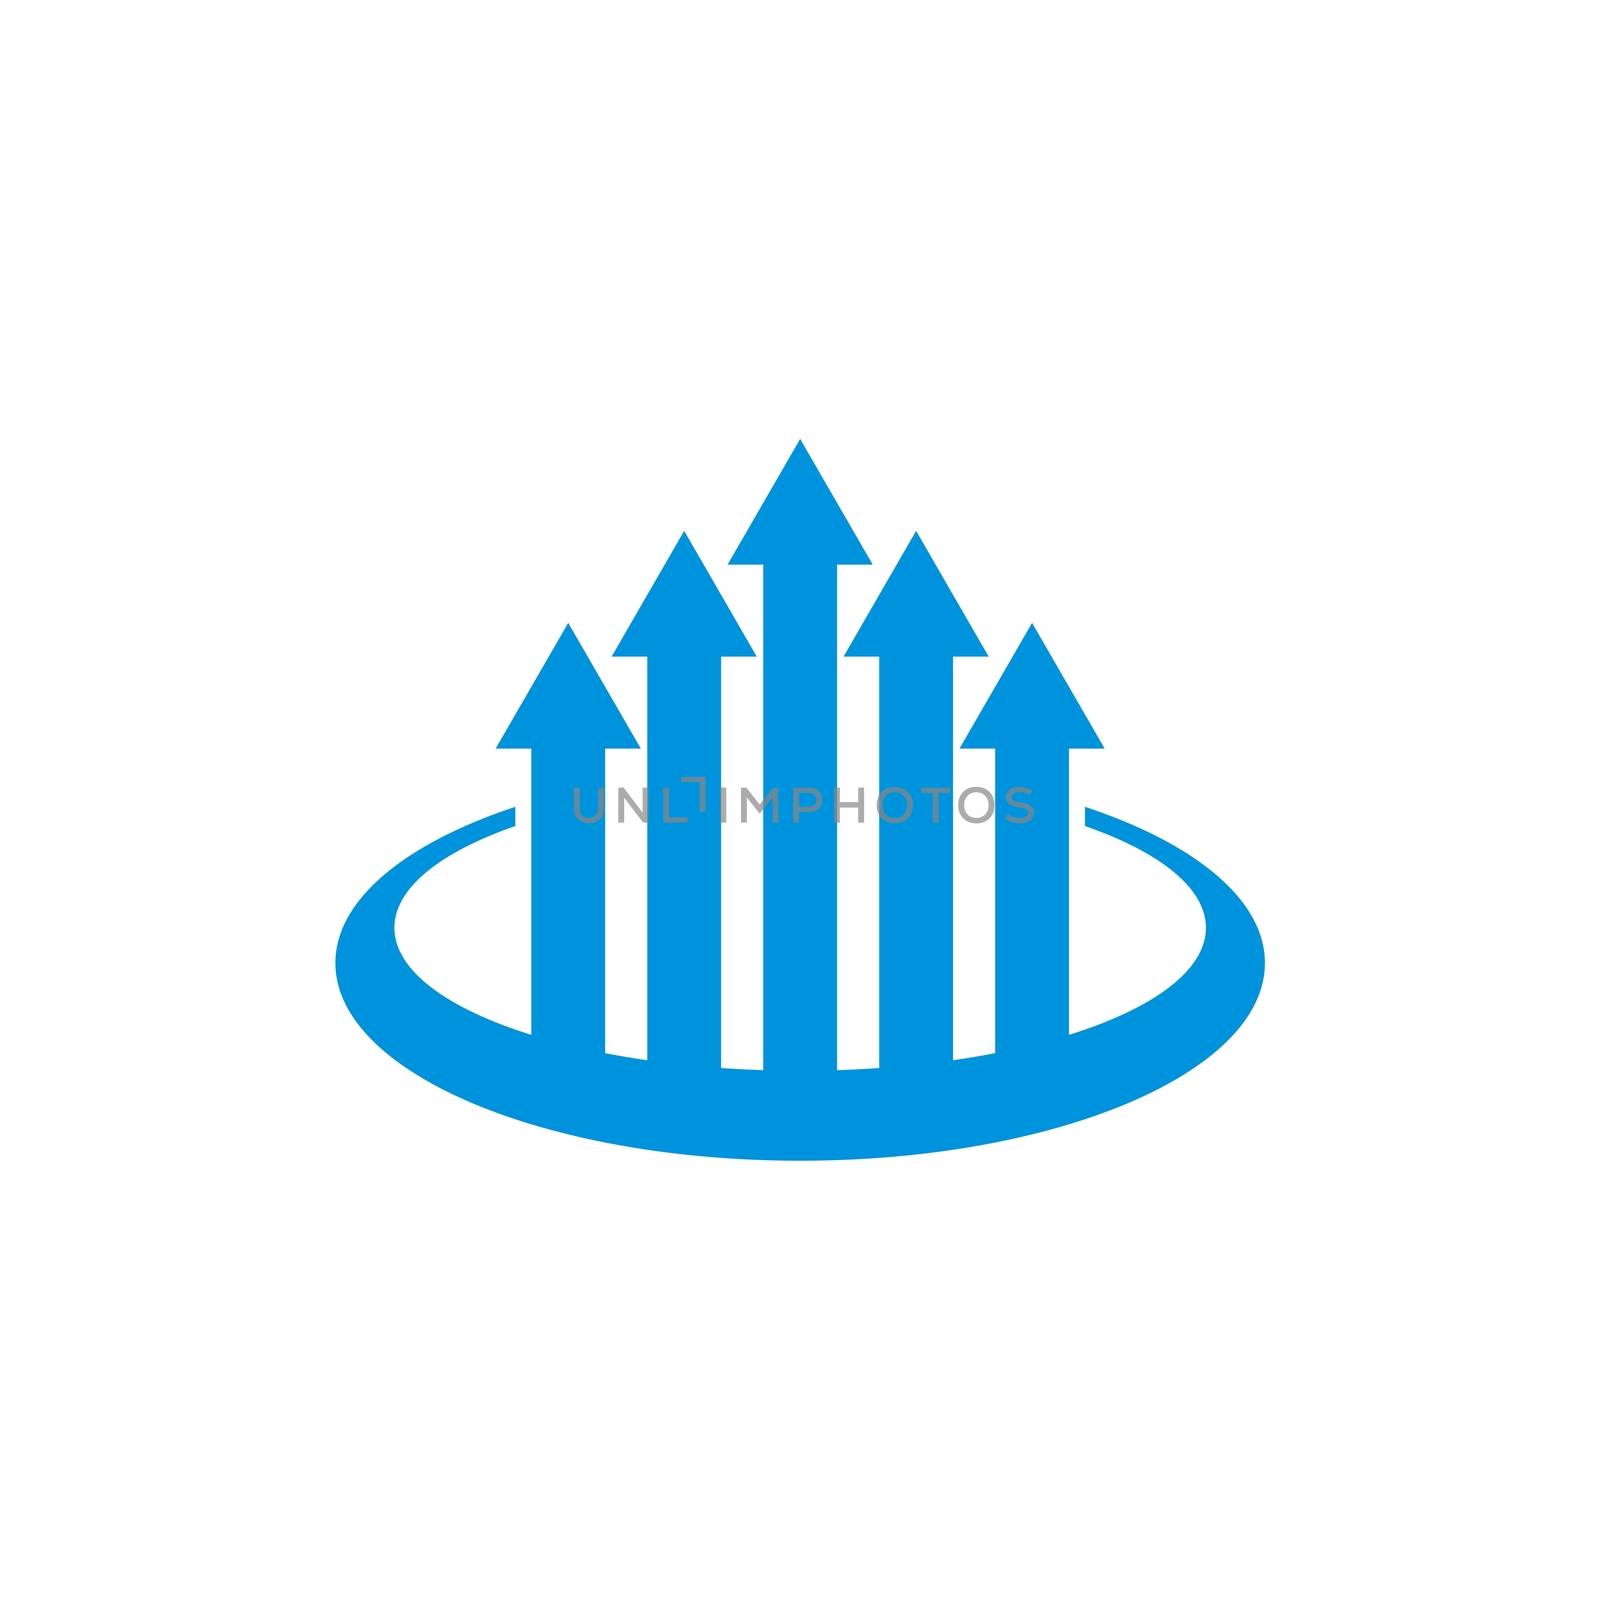 Blue Up Arrow Vector Logo Template Illustration Design. Vector EPS 10. by soponyono1